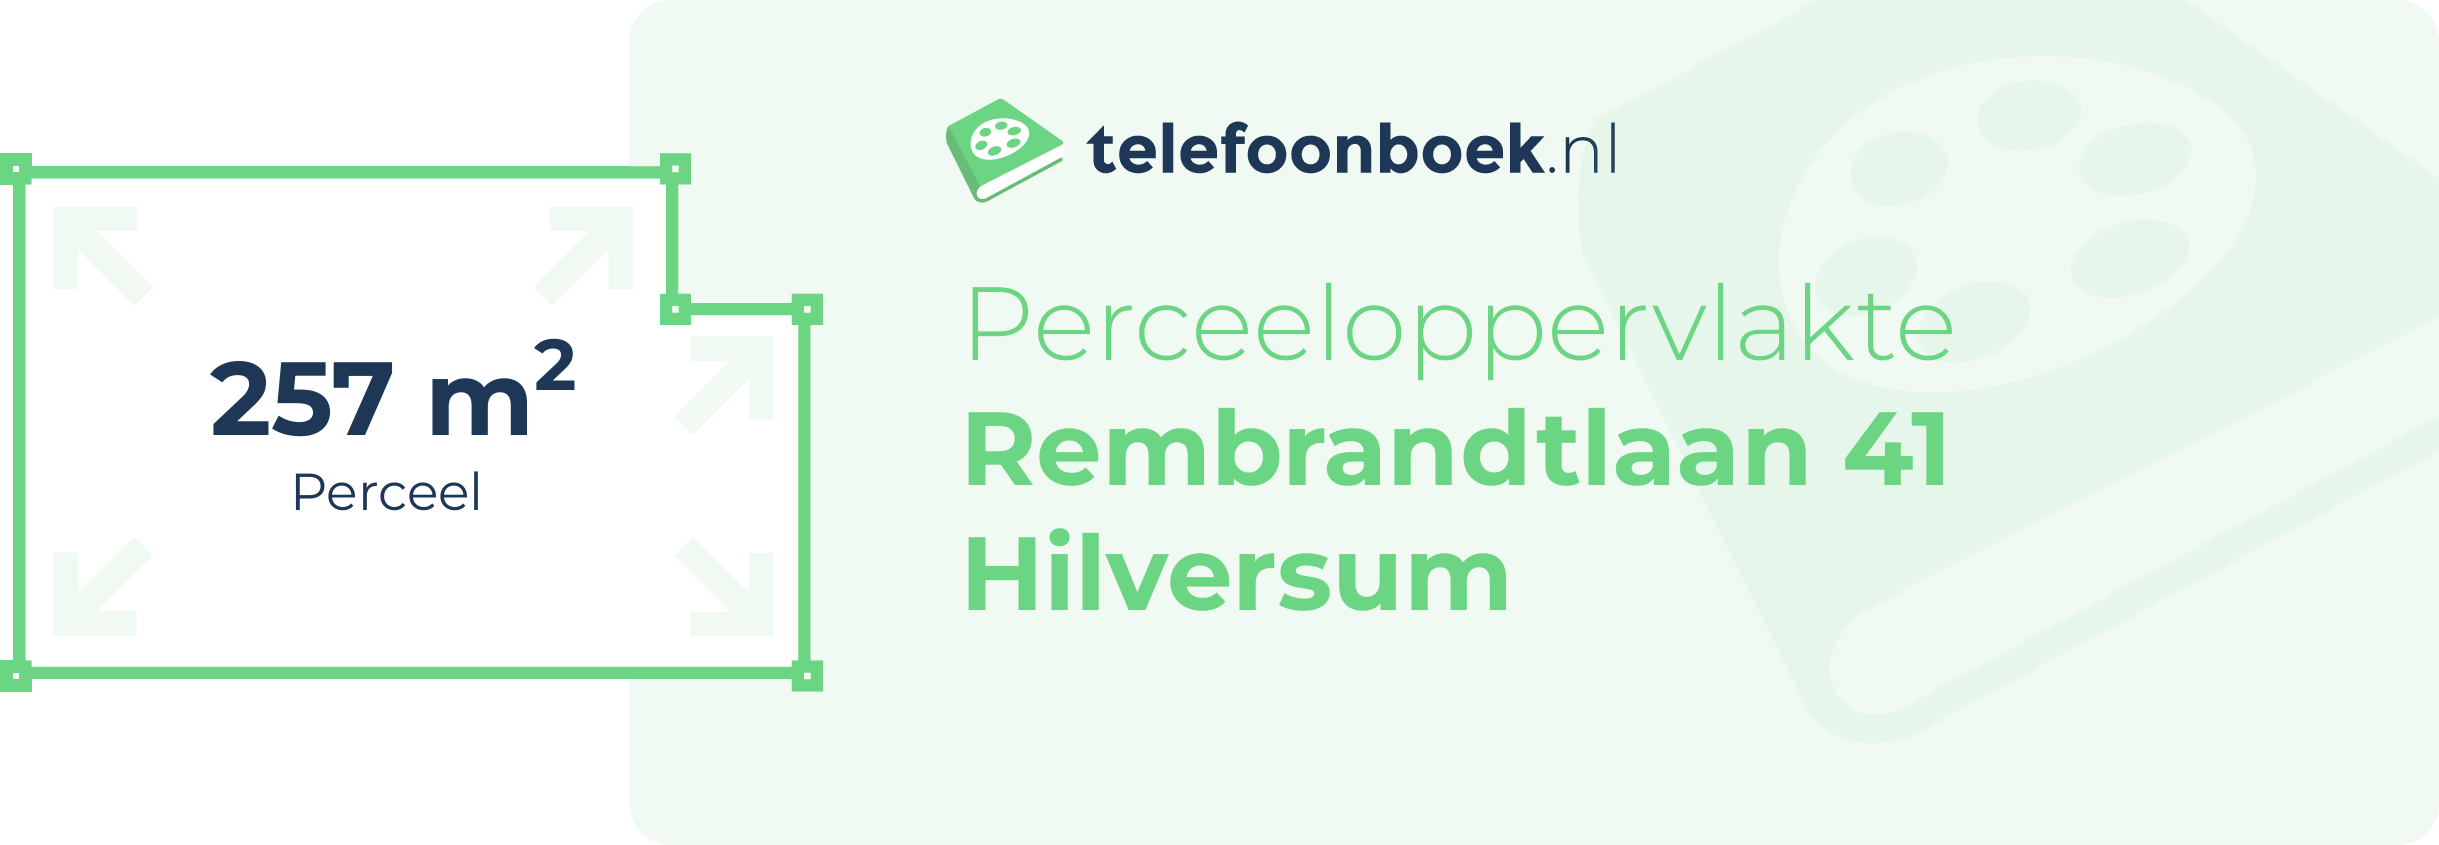 Perceeloppervlakte Rembrandtlaan 41 Hilversum